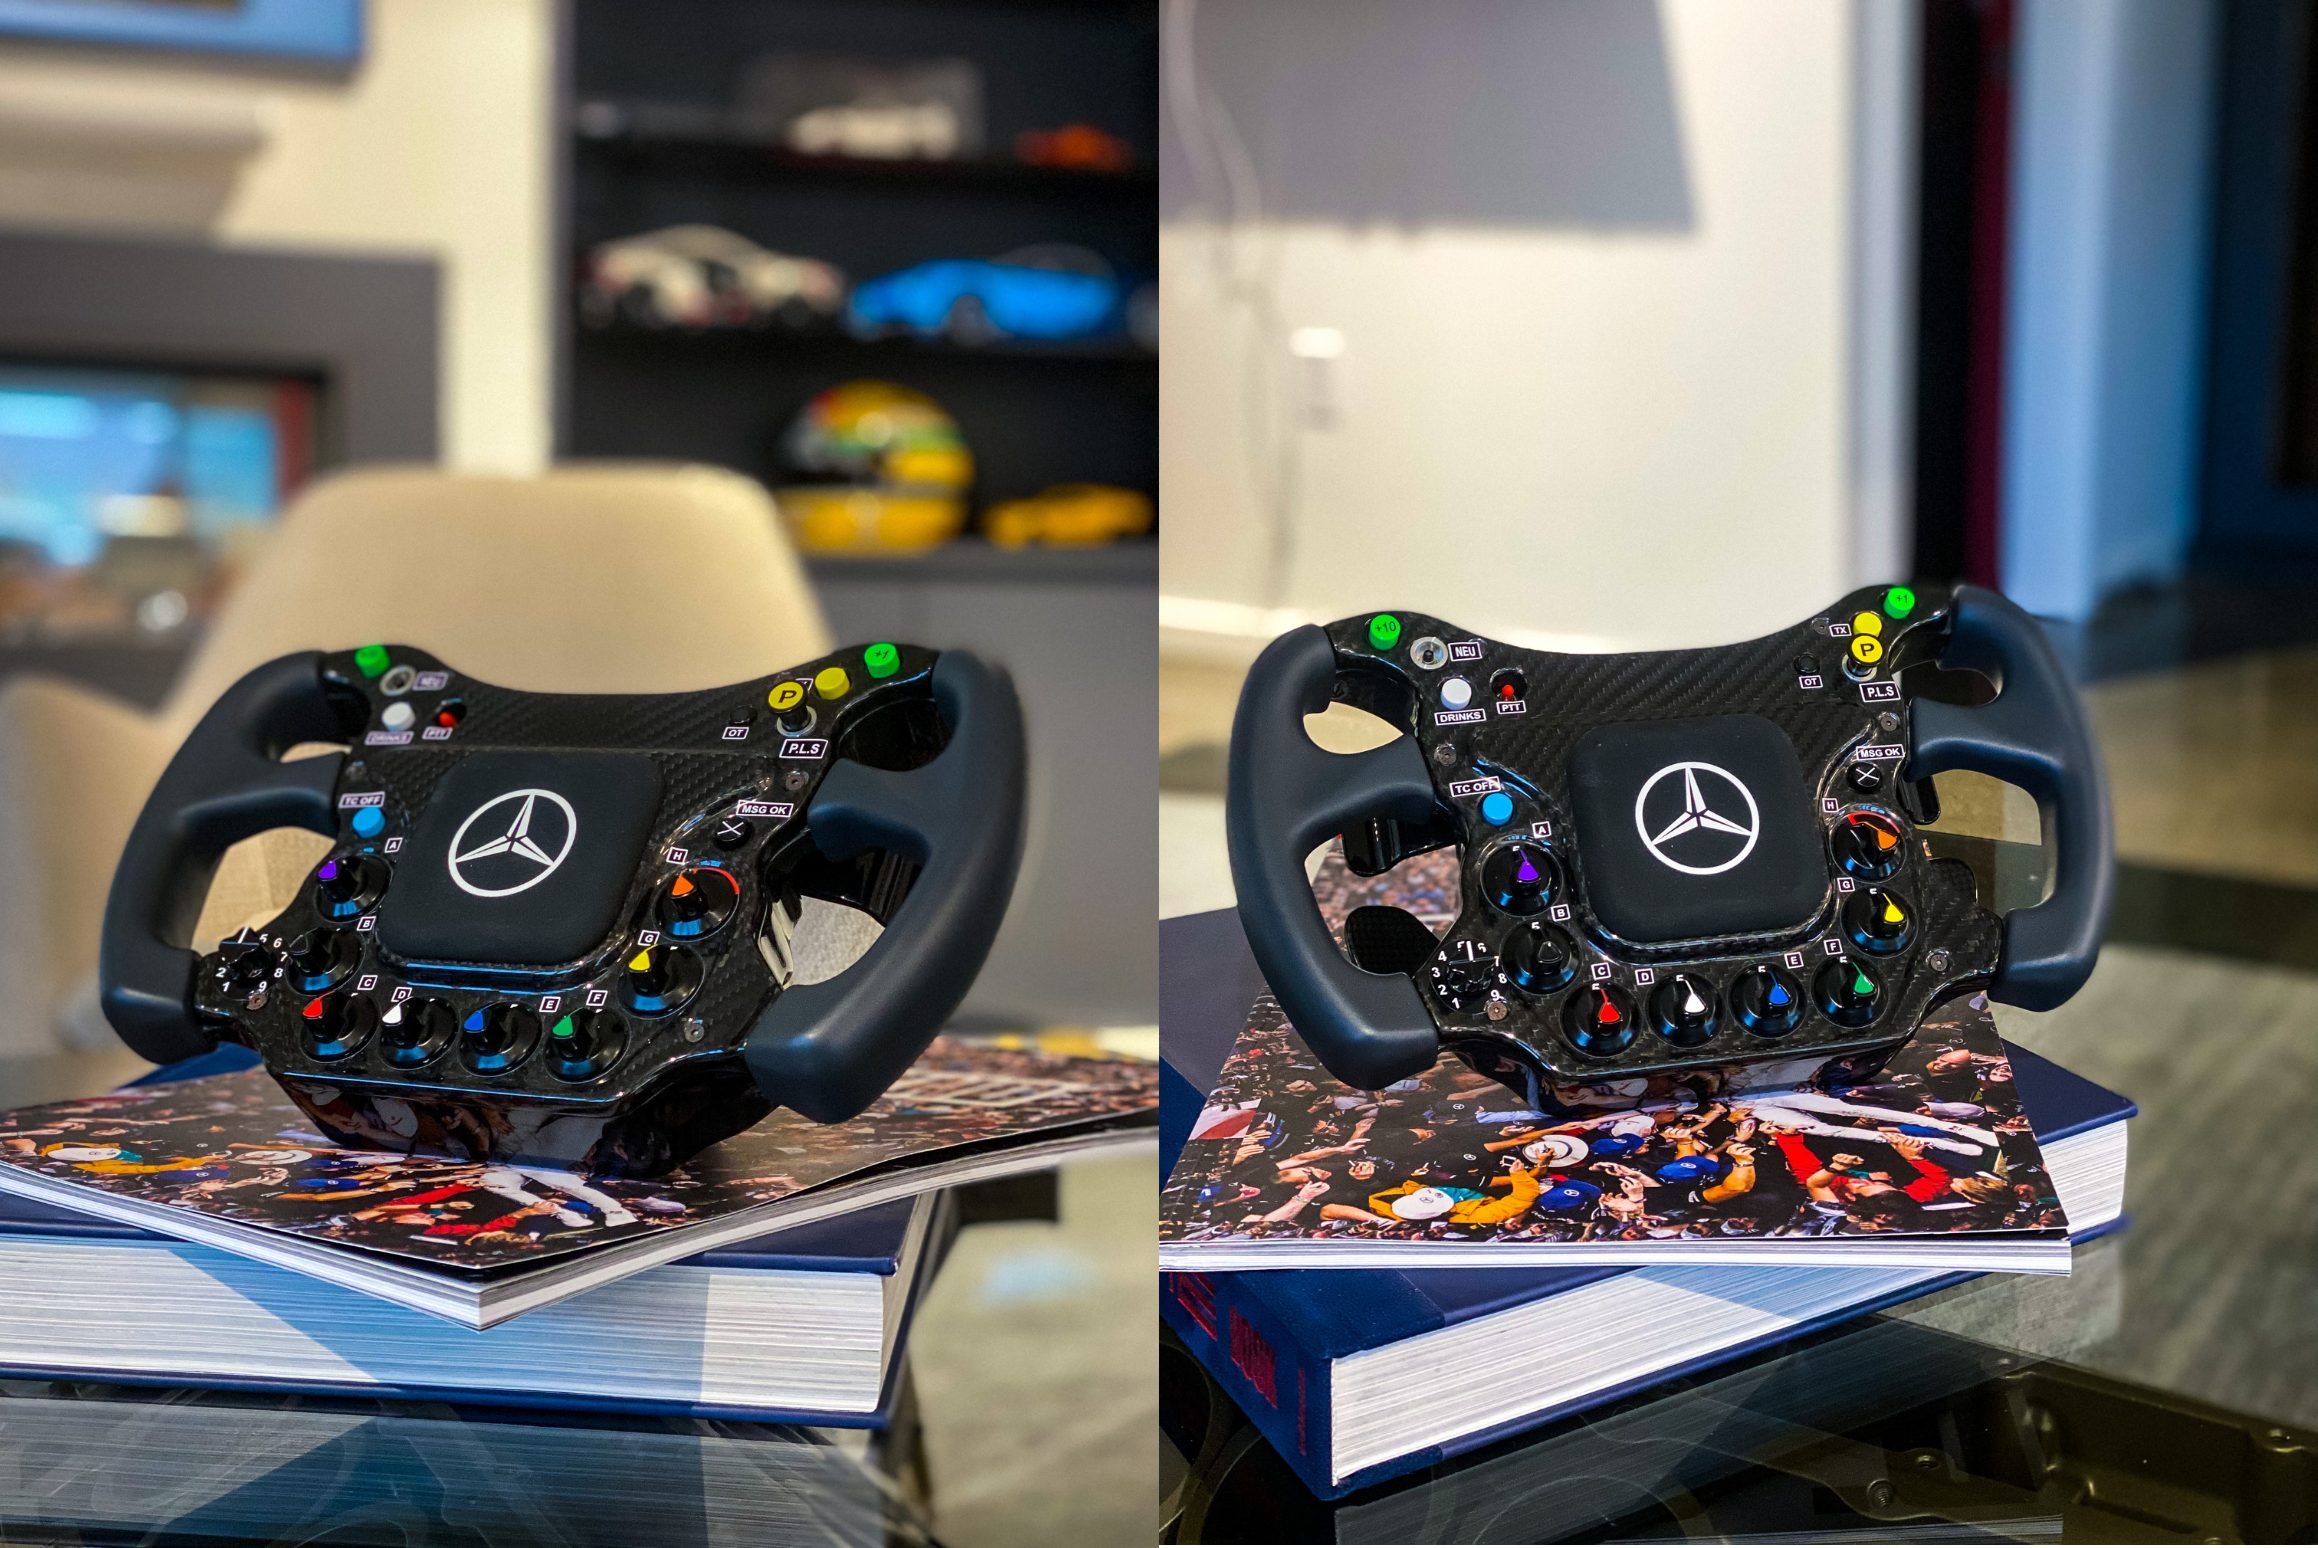 We're giving away an F1 steering wheel